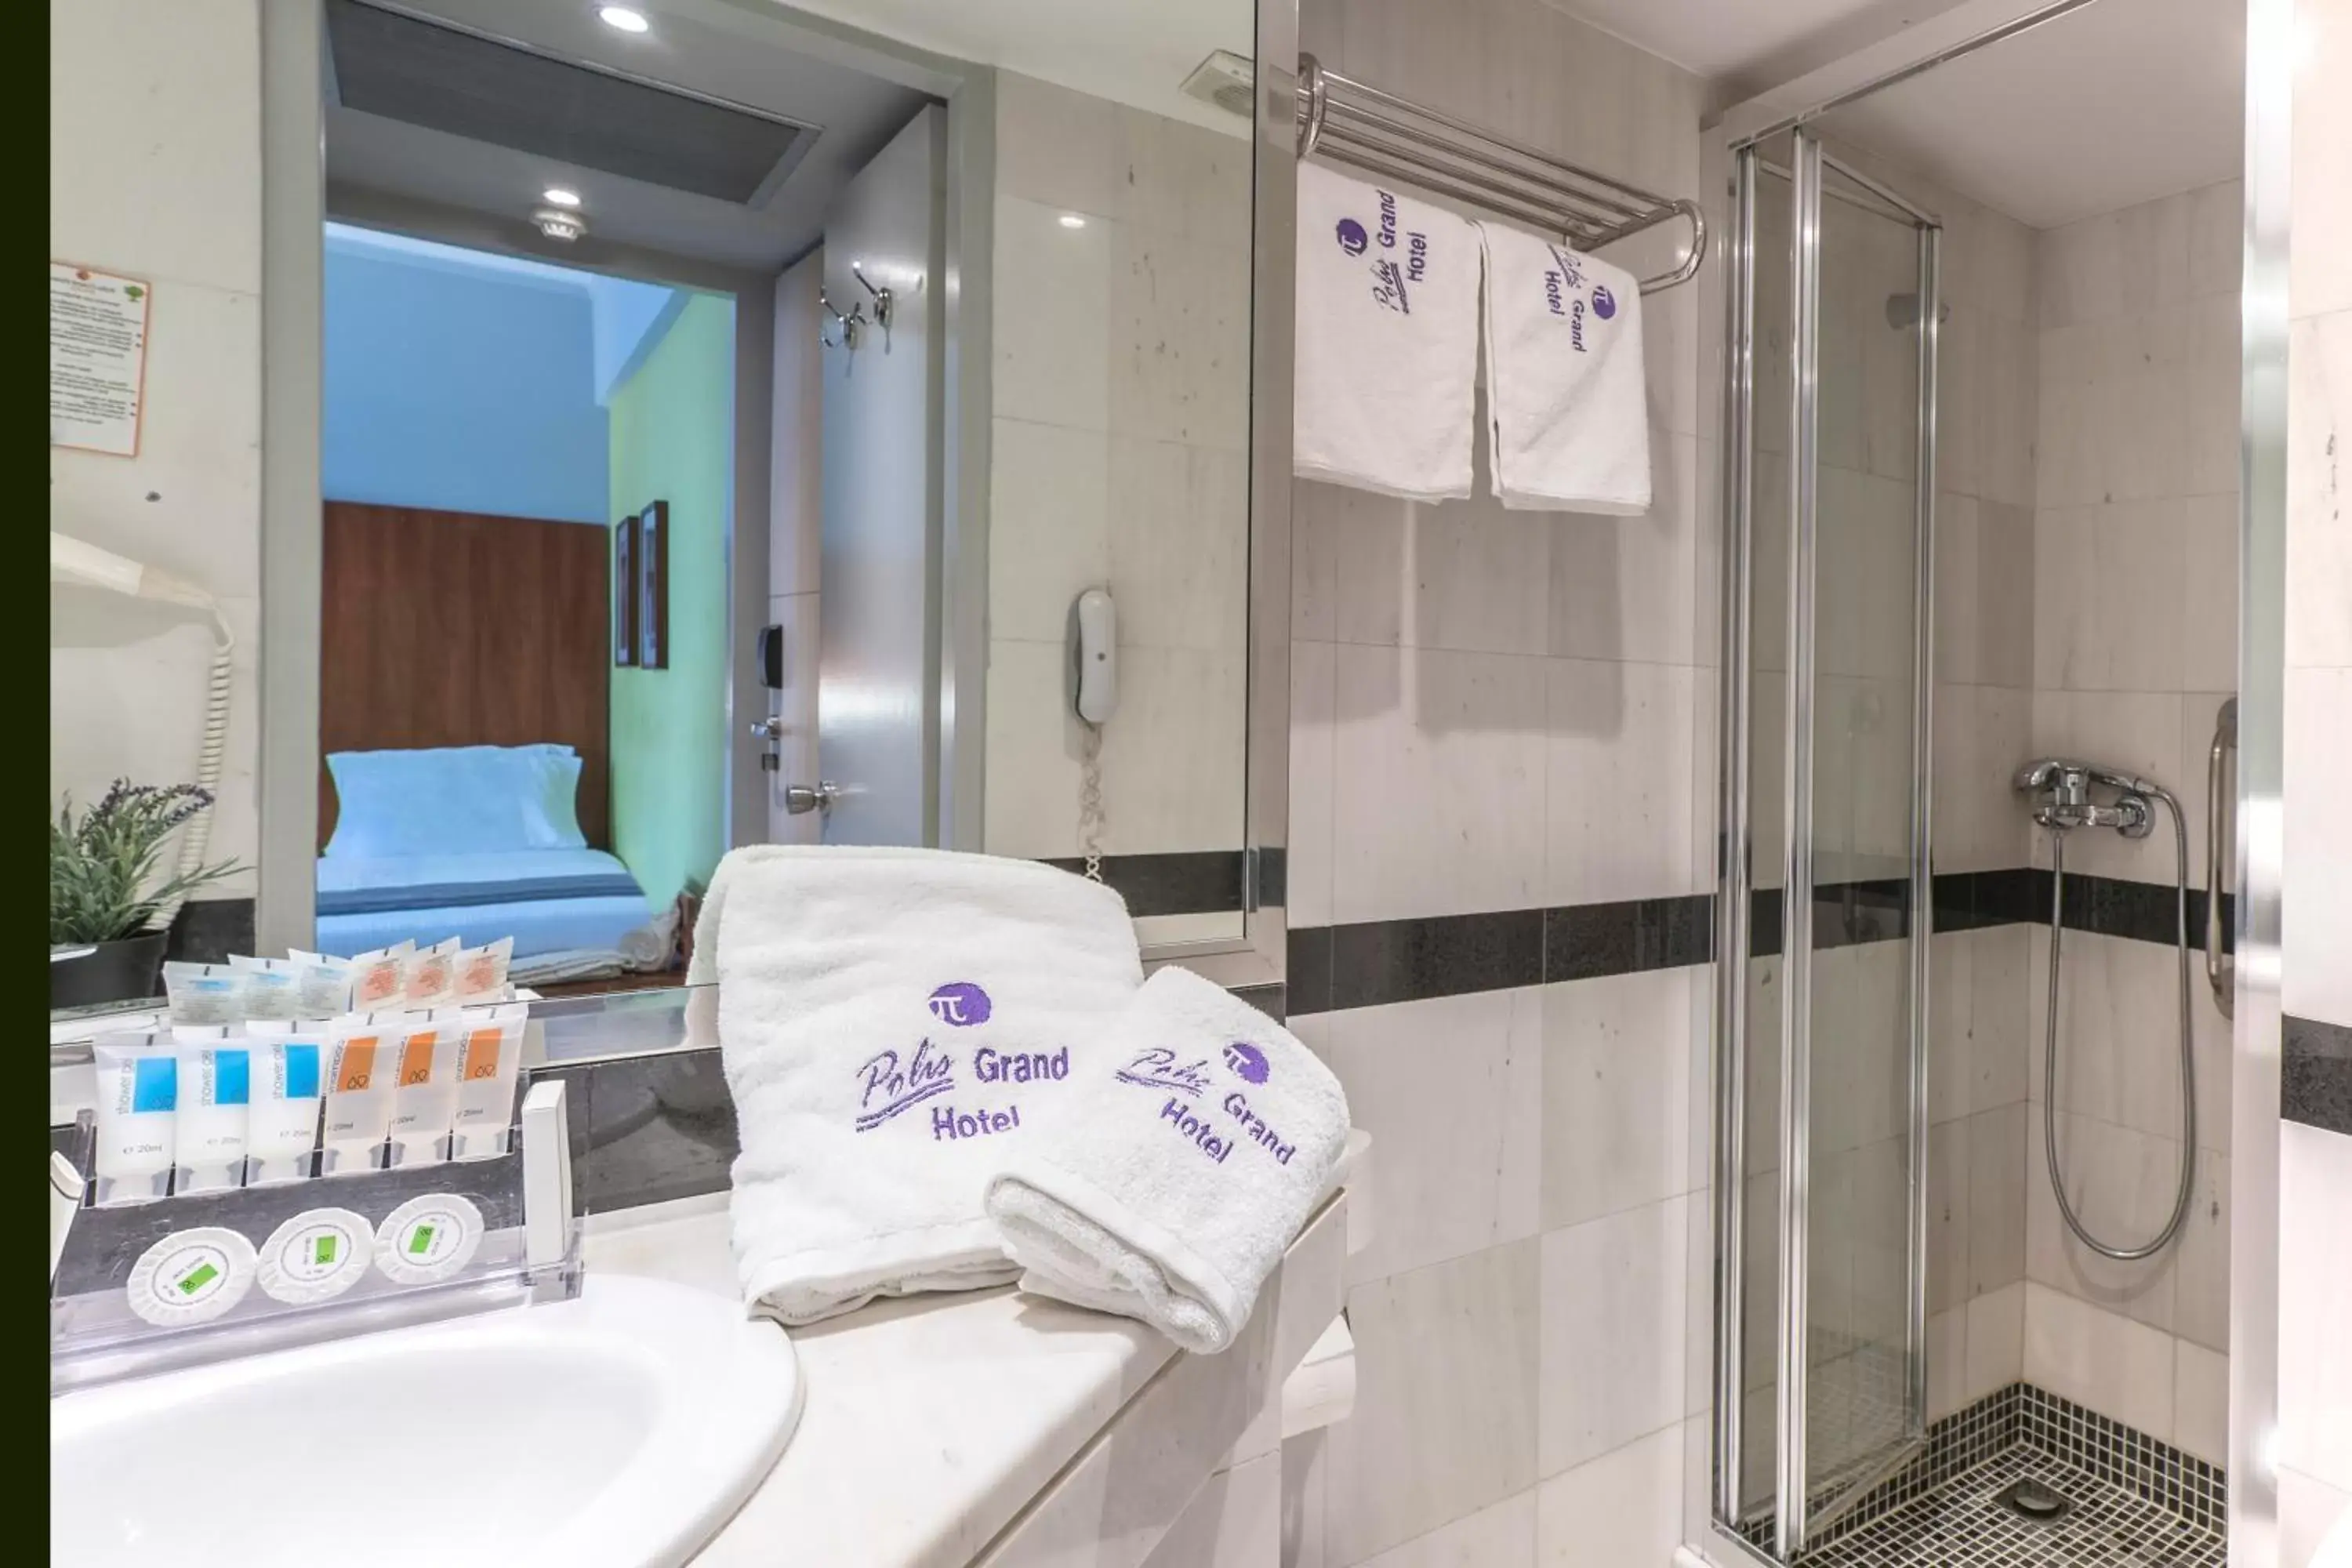 Shower, Bathroom in Polis Grand Hotel